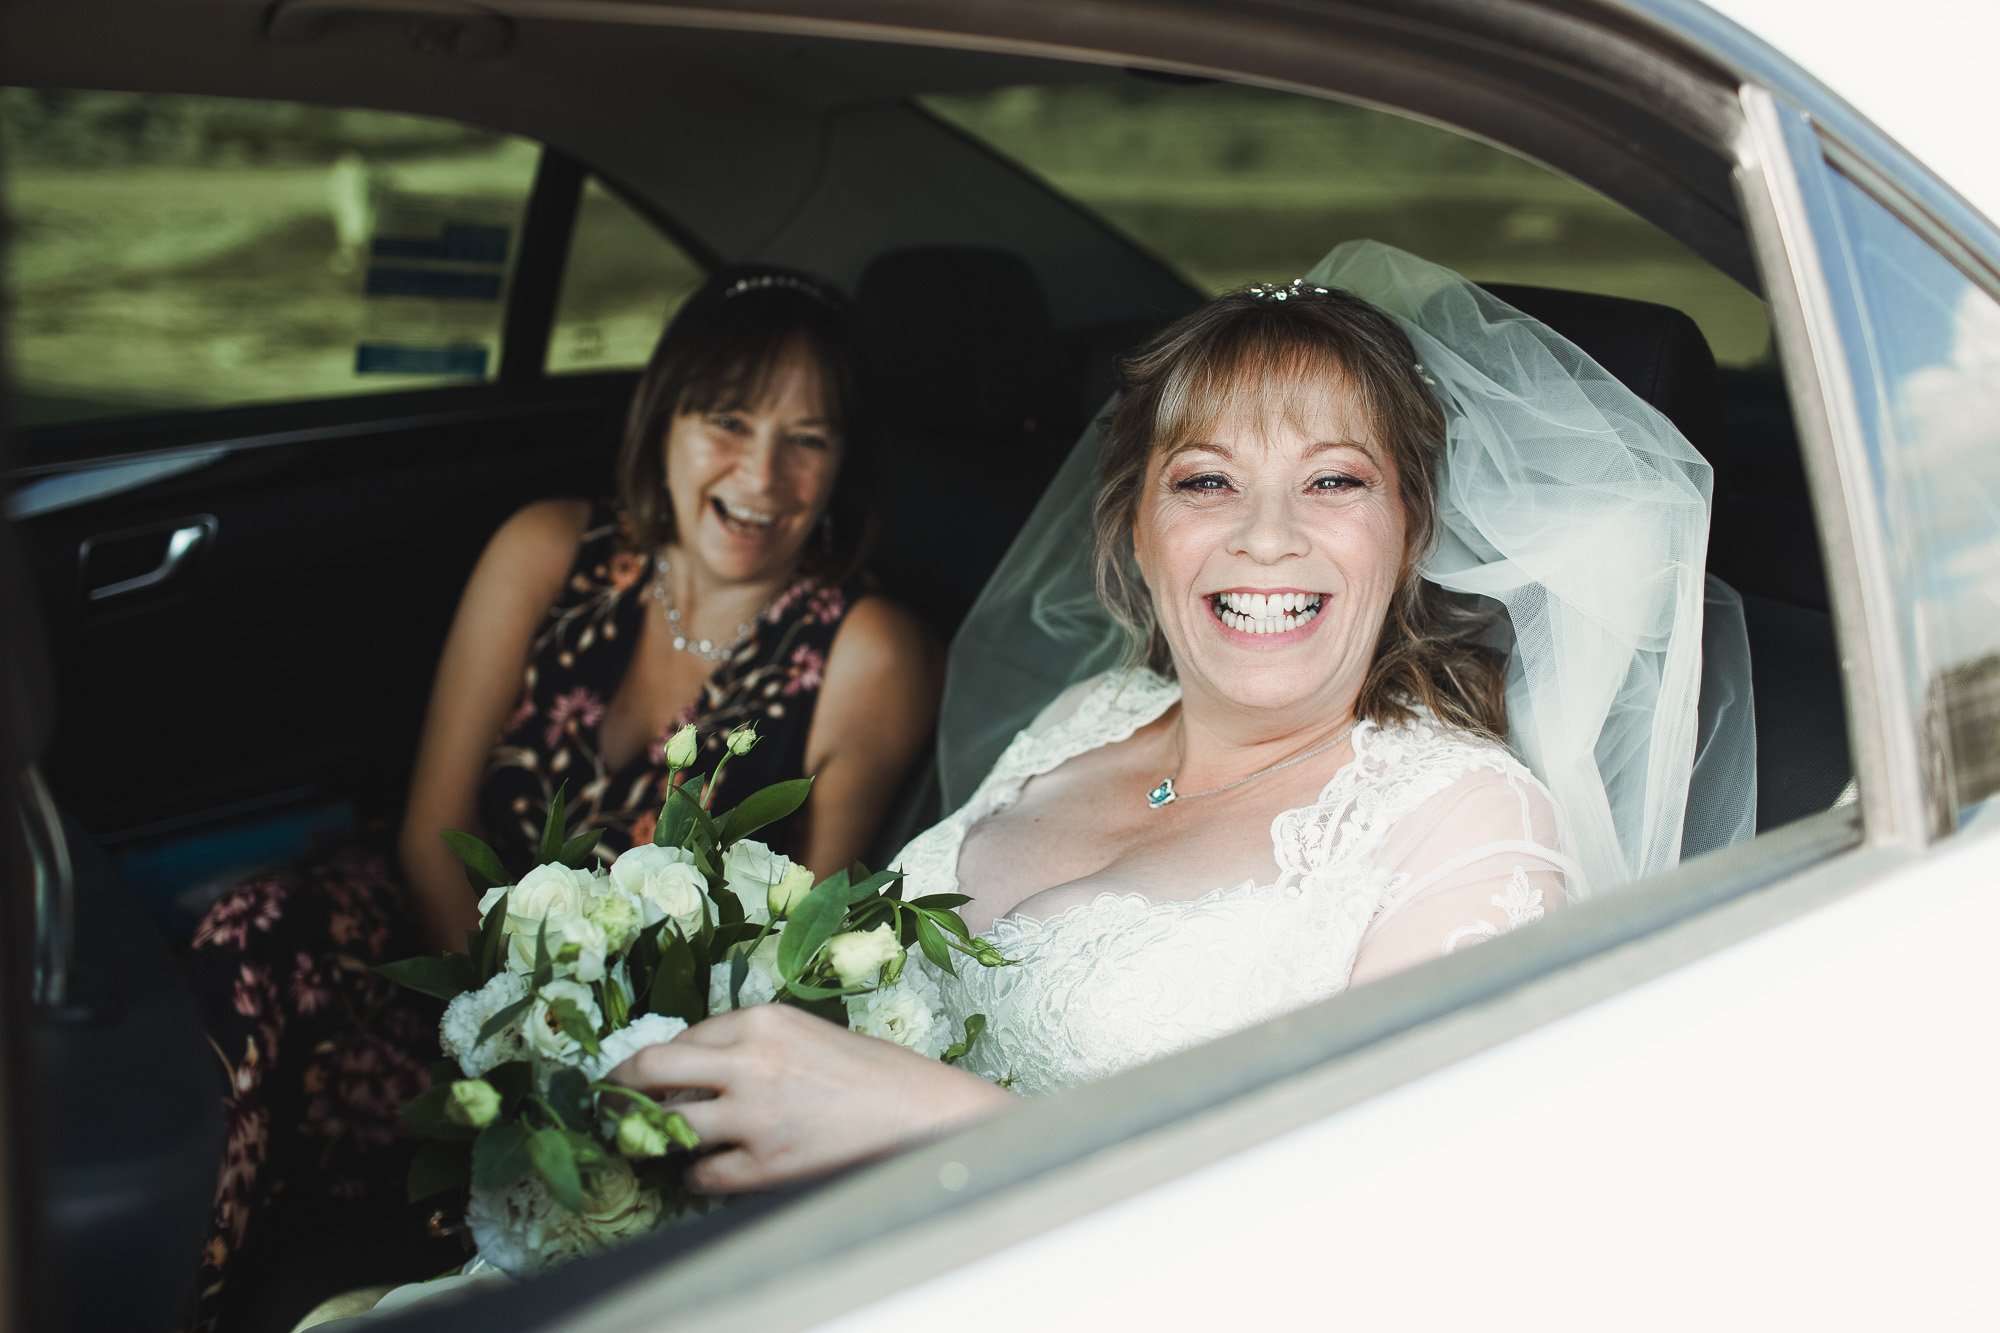 Bride arriving in car with bridesmaid